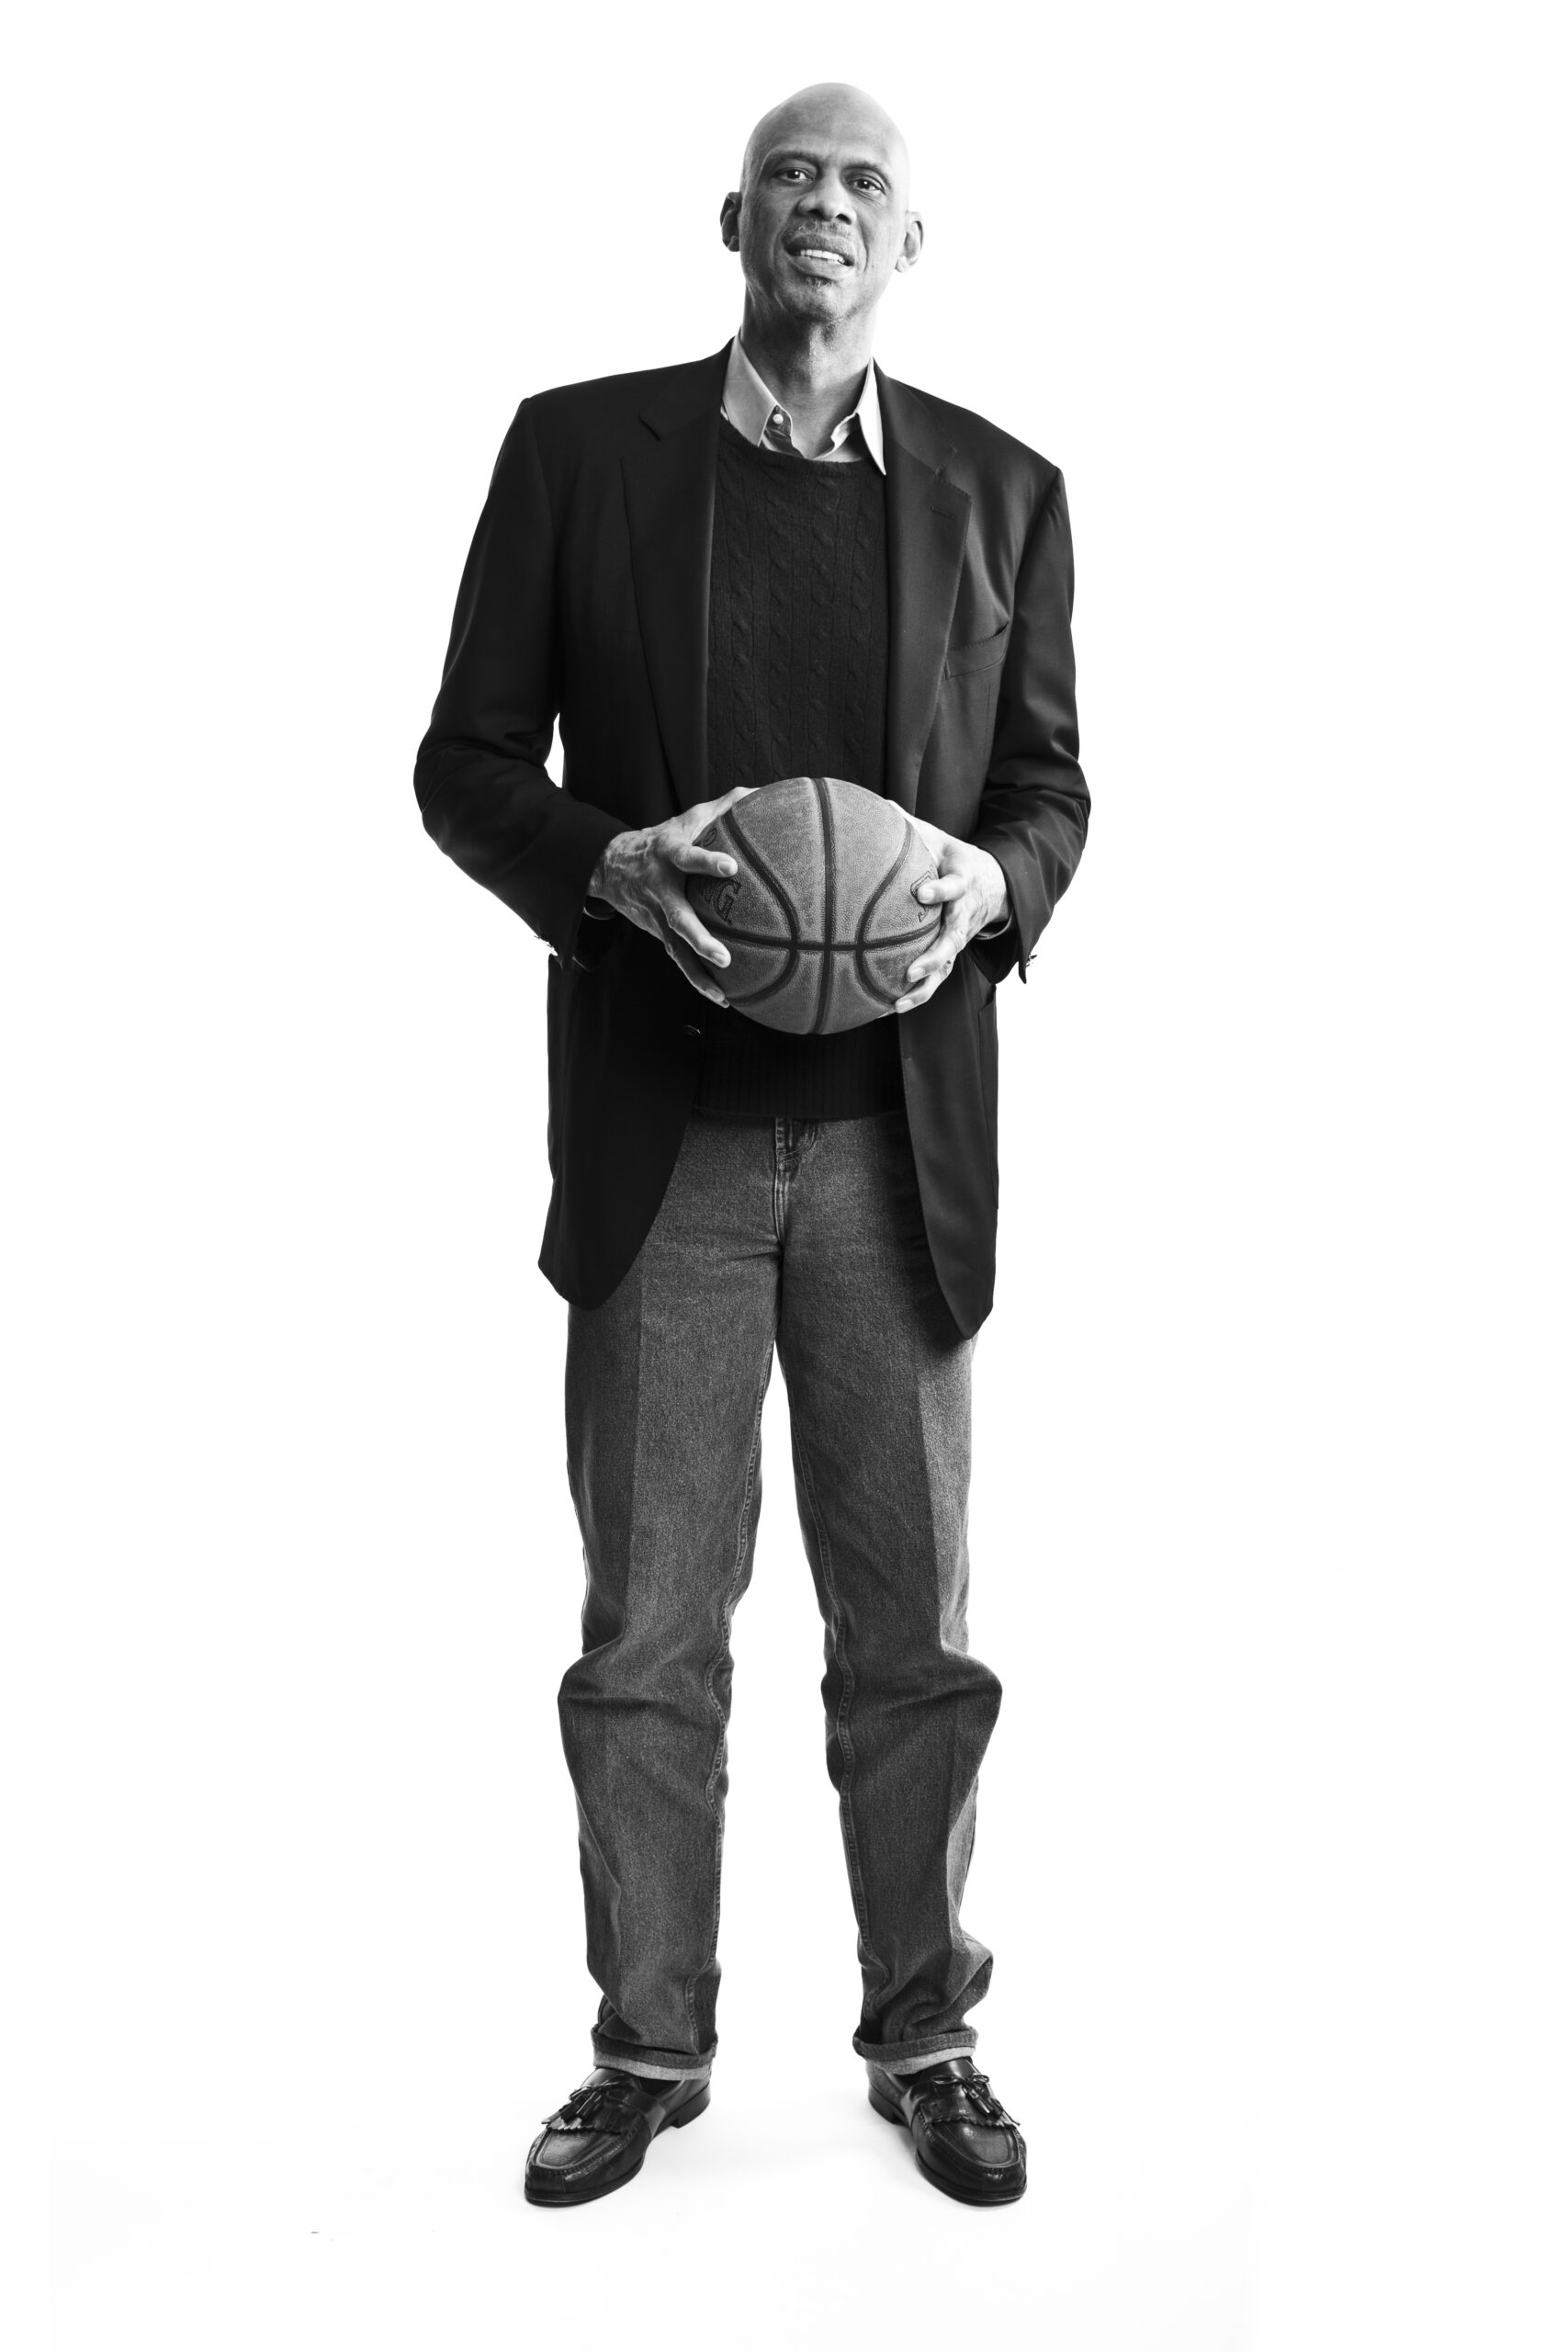 Kareem Abdul-Jabbar Height: How Tall is Kareem Abdul-Jabbar?